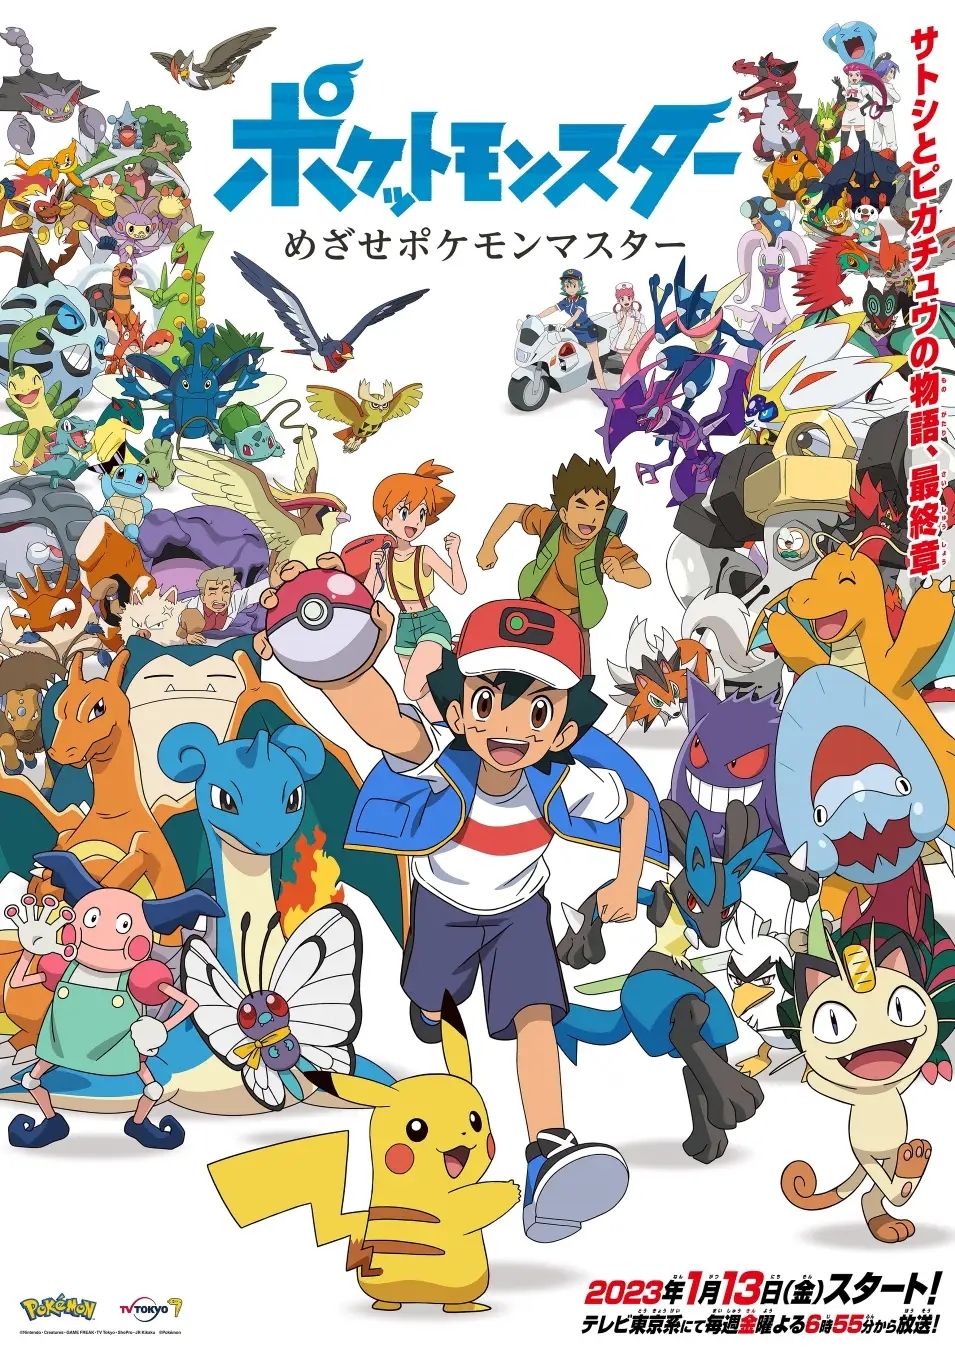 Anime_APM_Poster.jpg